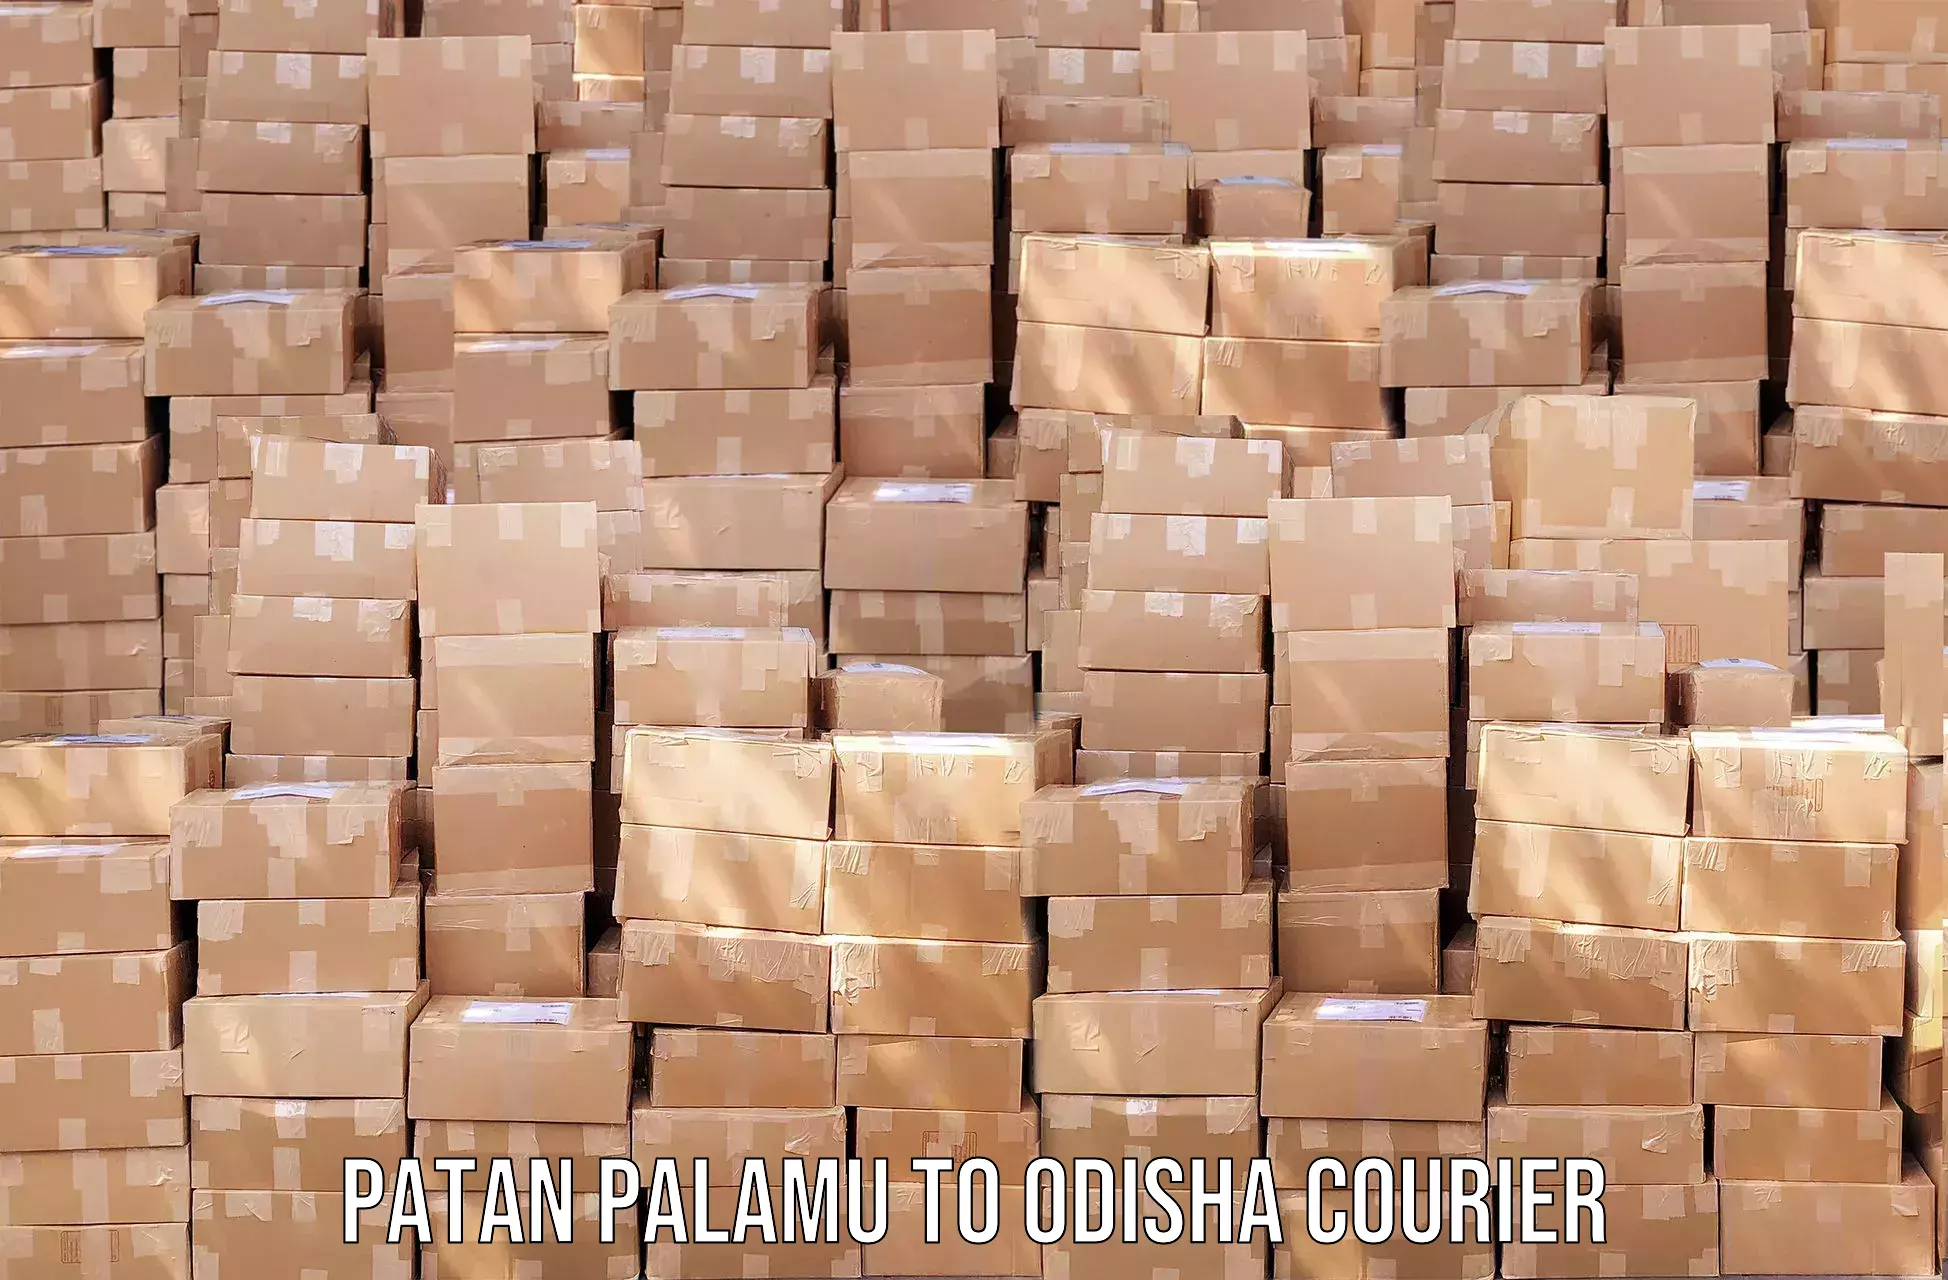 State-of-the-art courier technology Patan Palamu to Bhanjanagar